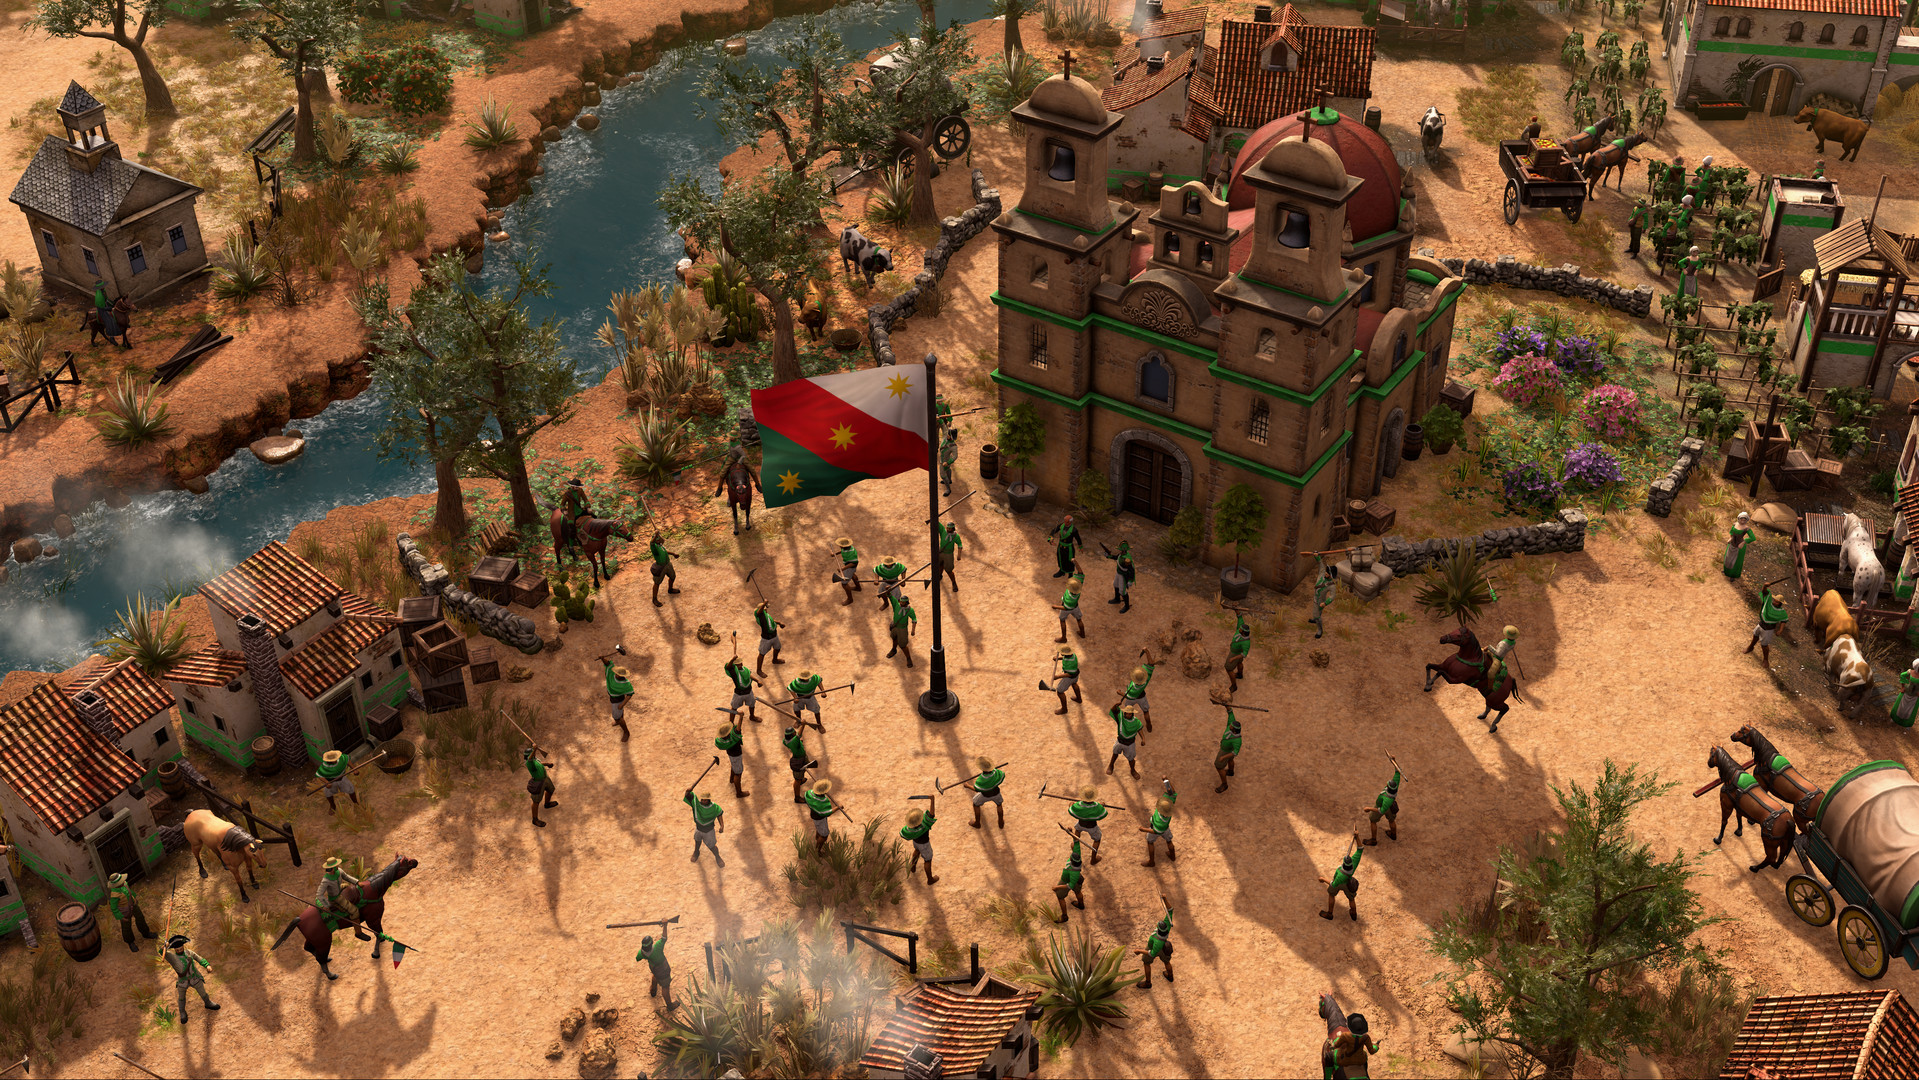 [$ 2.49] Age of Empires III: Definitive Edition - Mexico Civilization DLC Steam CD Key